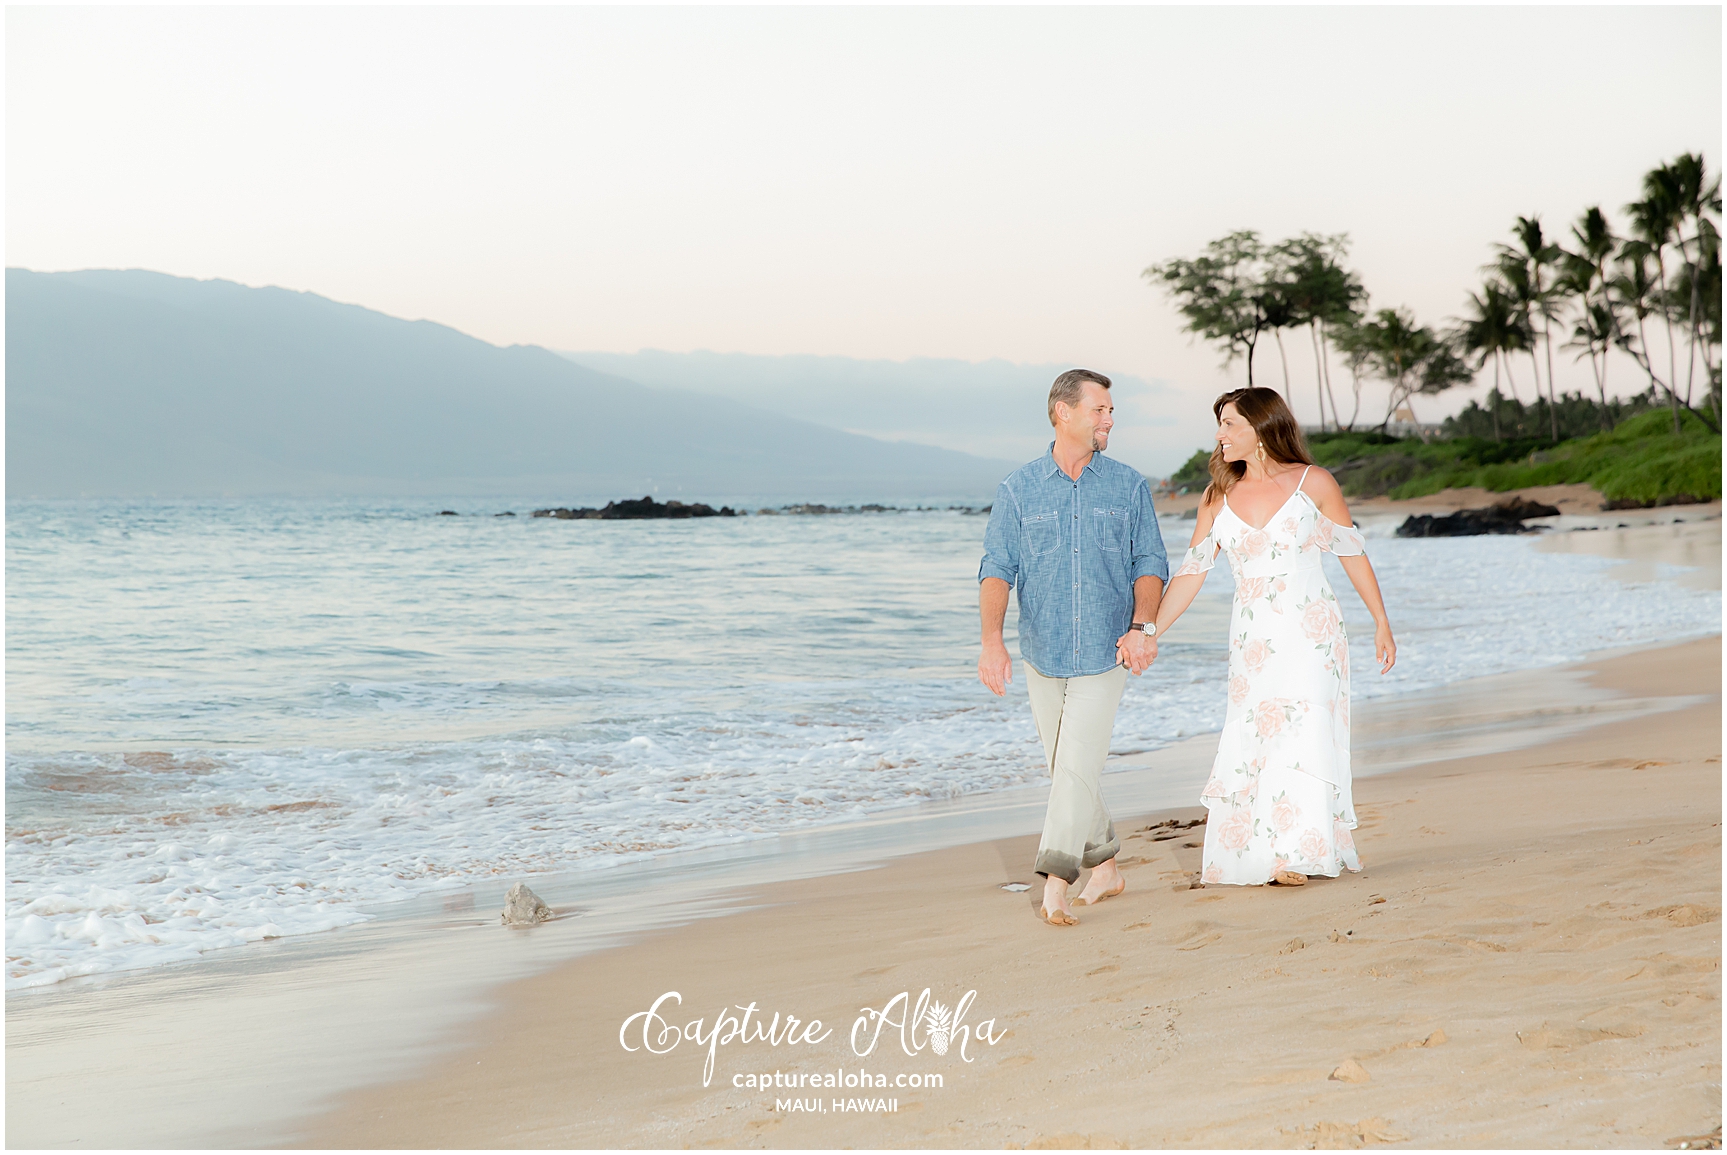 Maui Couples Photography at Mokapu Beach, Maui at sunset with couple walking on the beach